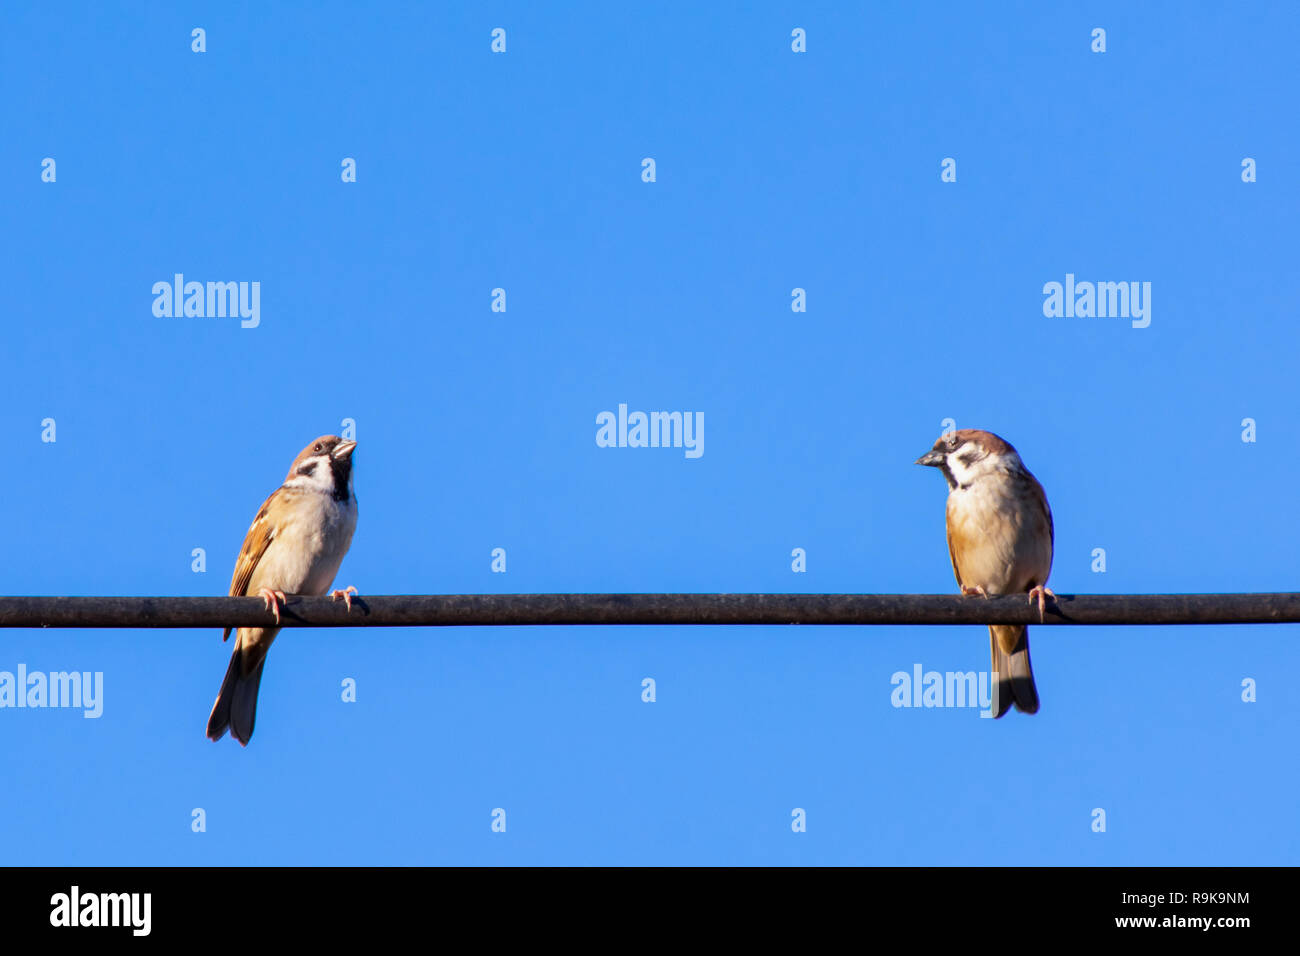 Sparrow bird seduta sul cavo elettrico con cielo blu sullo sfondo Foto Stock